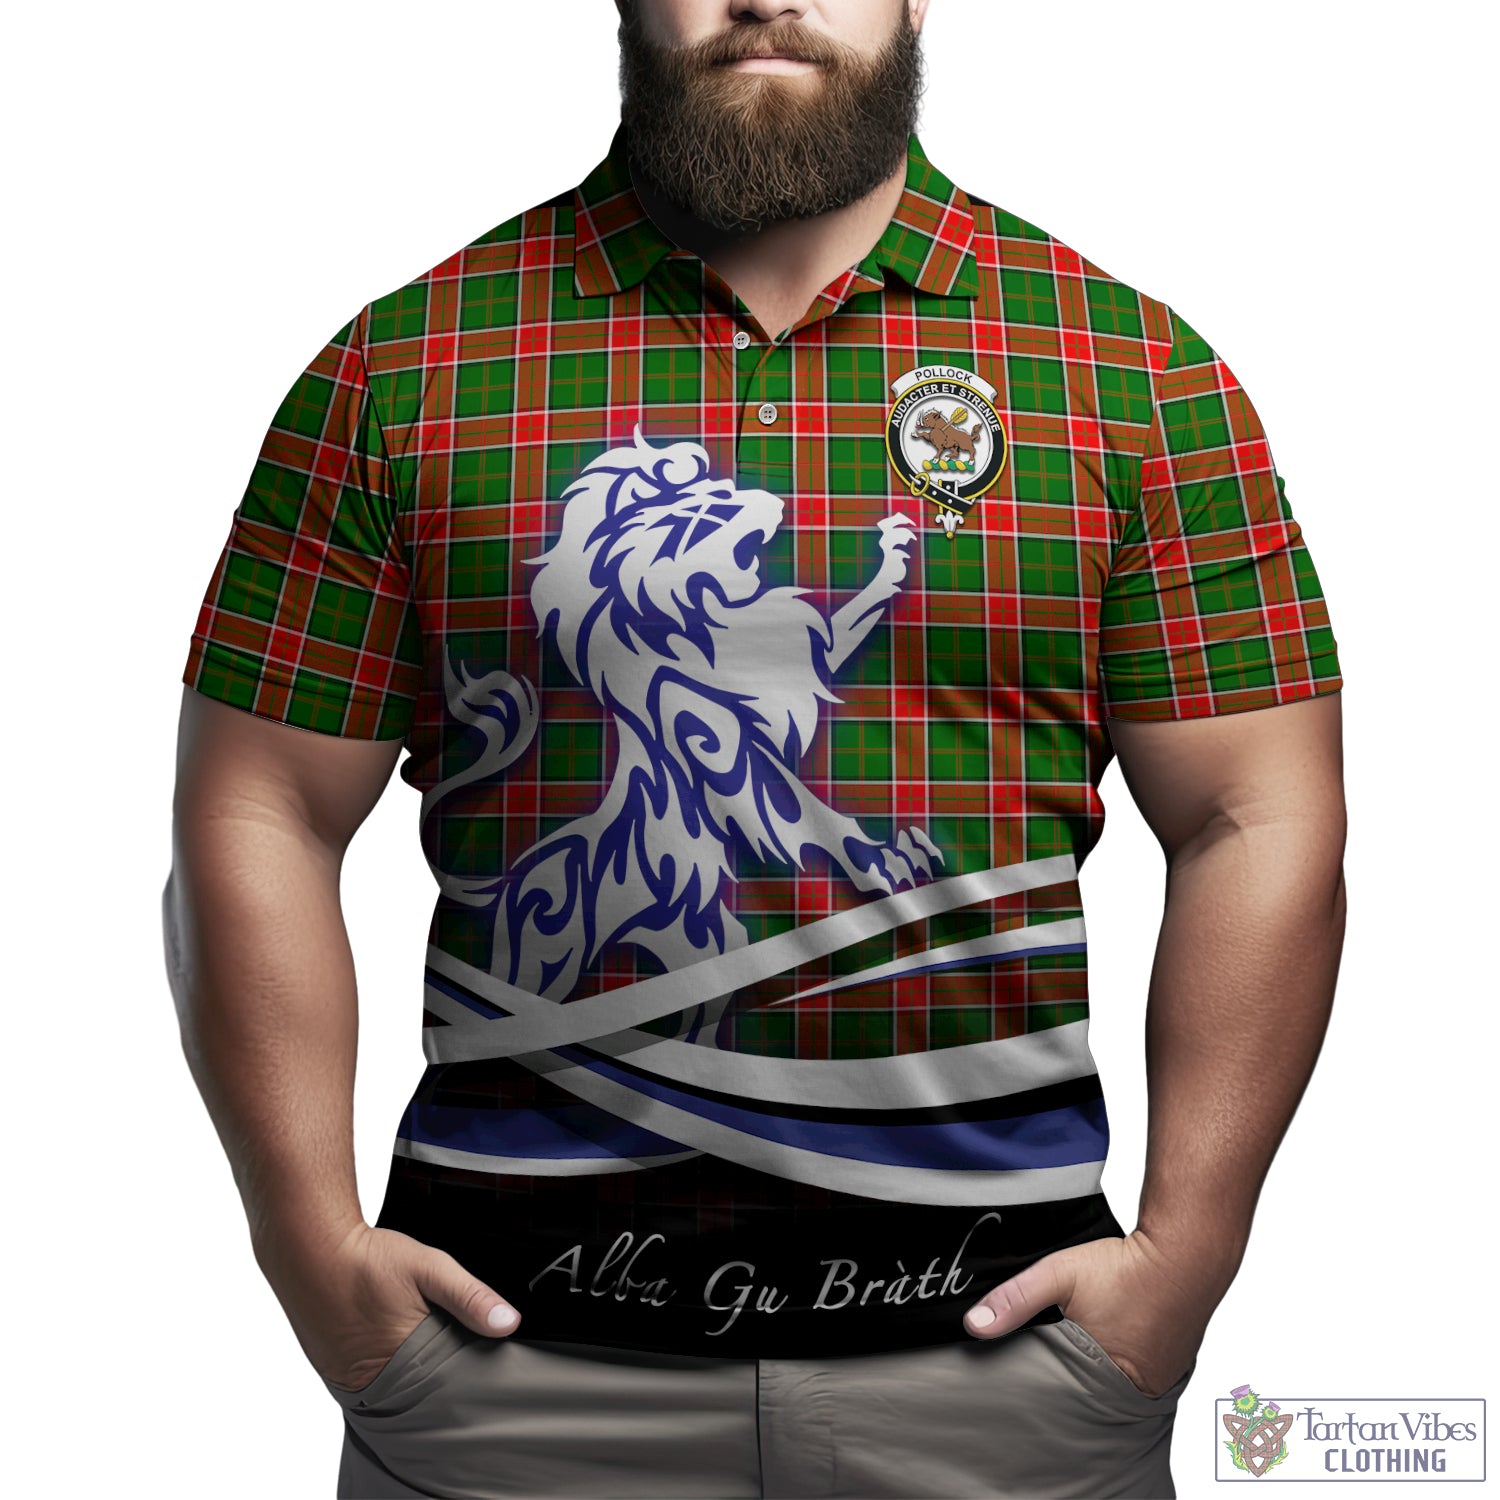 pollock-modern-tartan-polo-shirt-with-alba-gu-brath-regal-lion-emblem